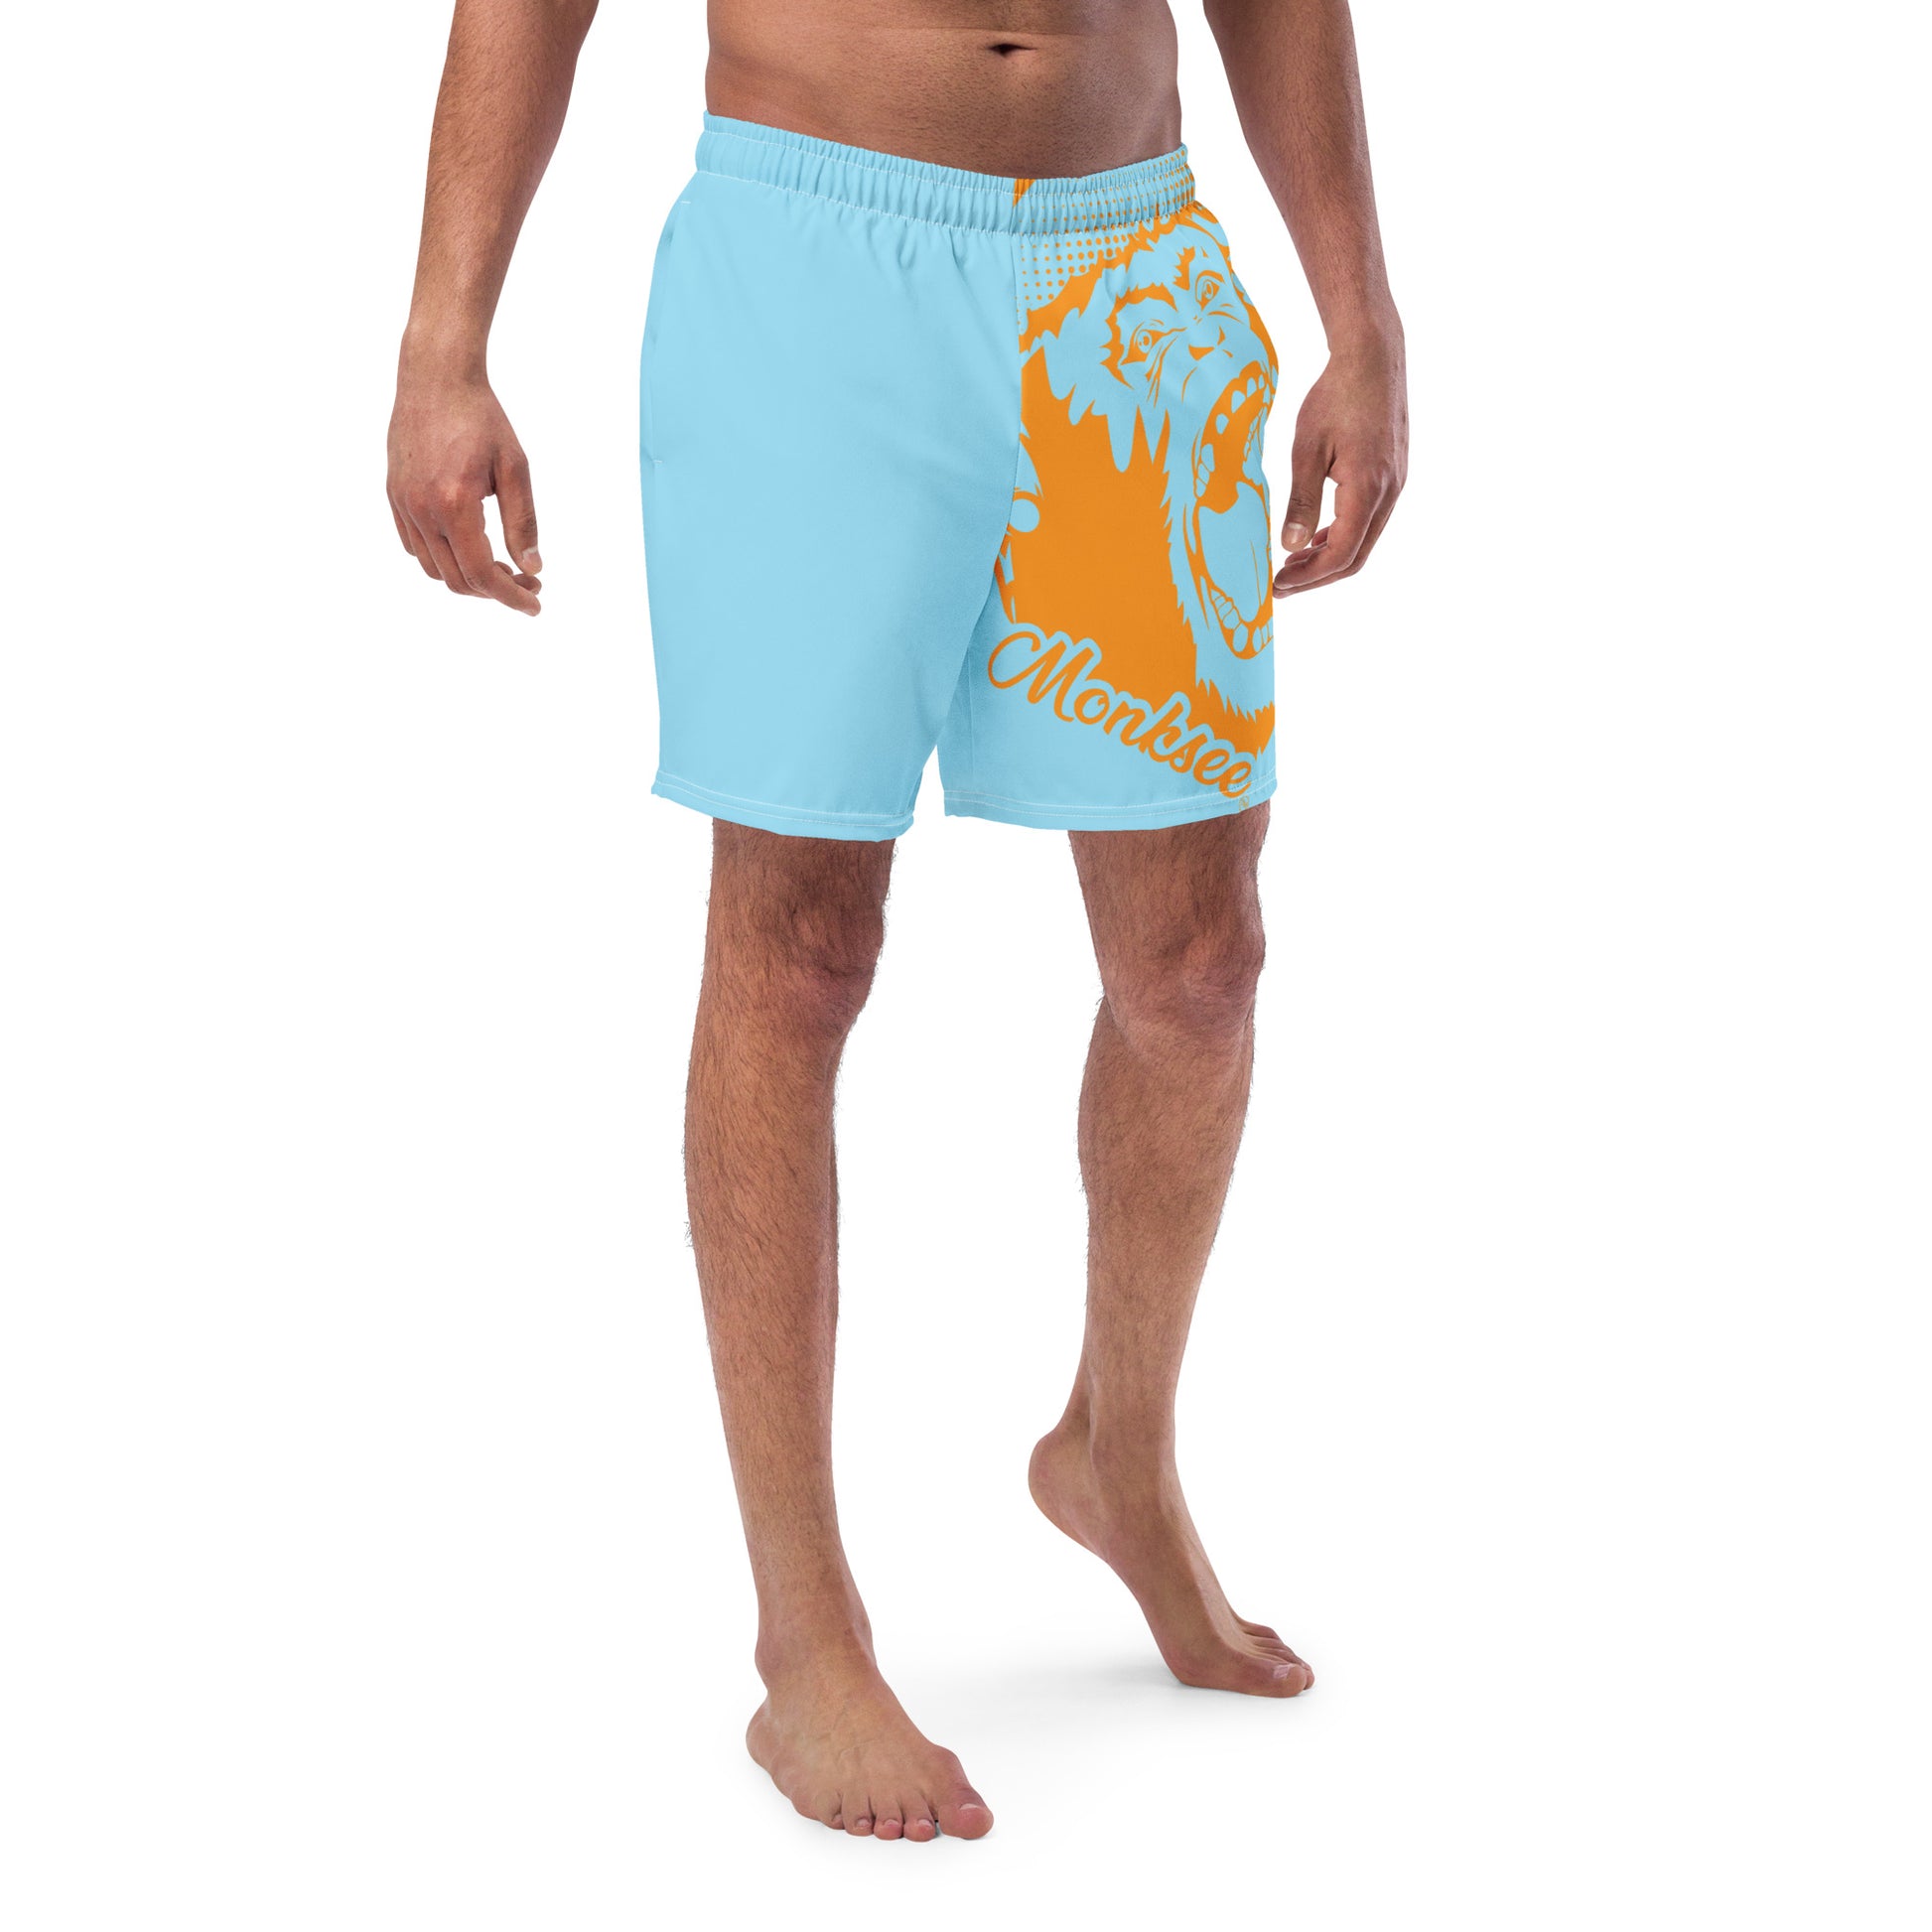 Monksee Face - Men's Coral Swim Trunks.